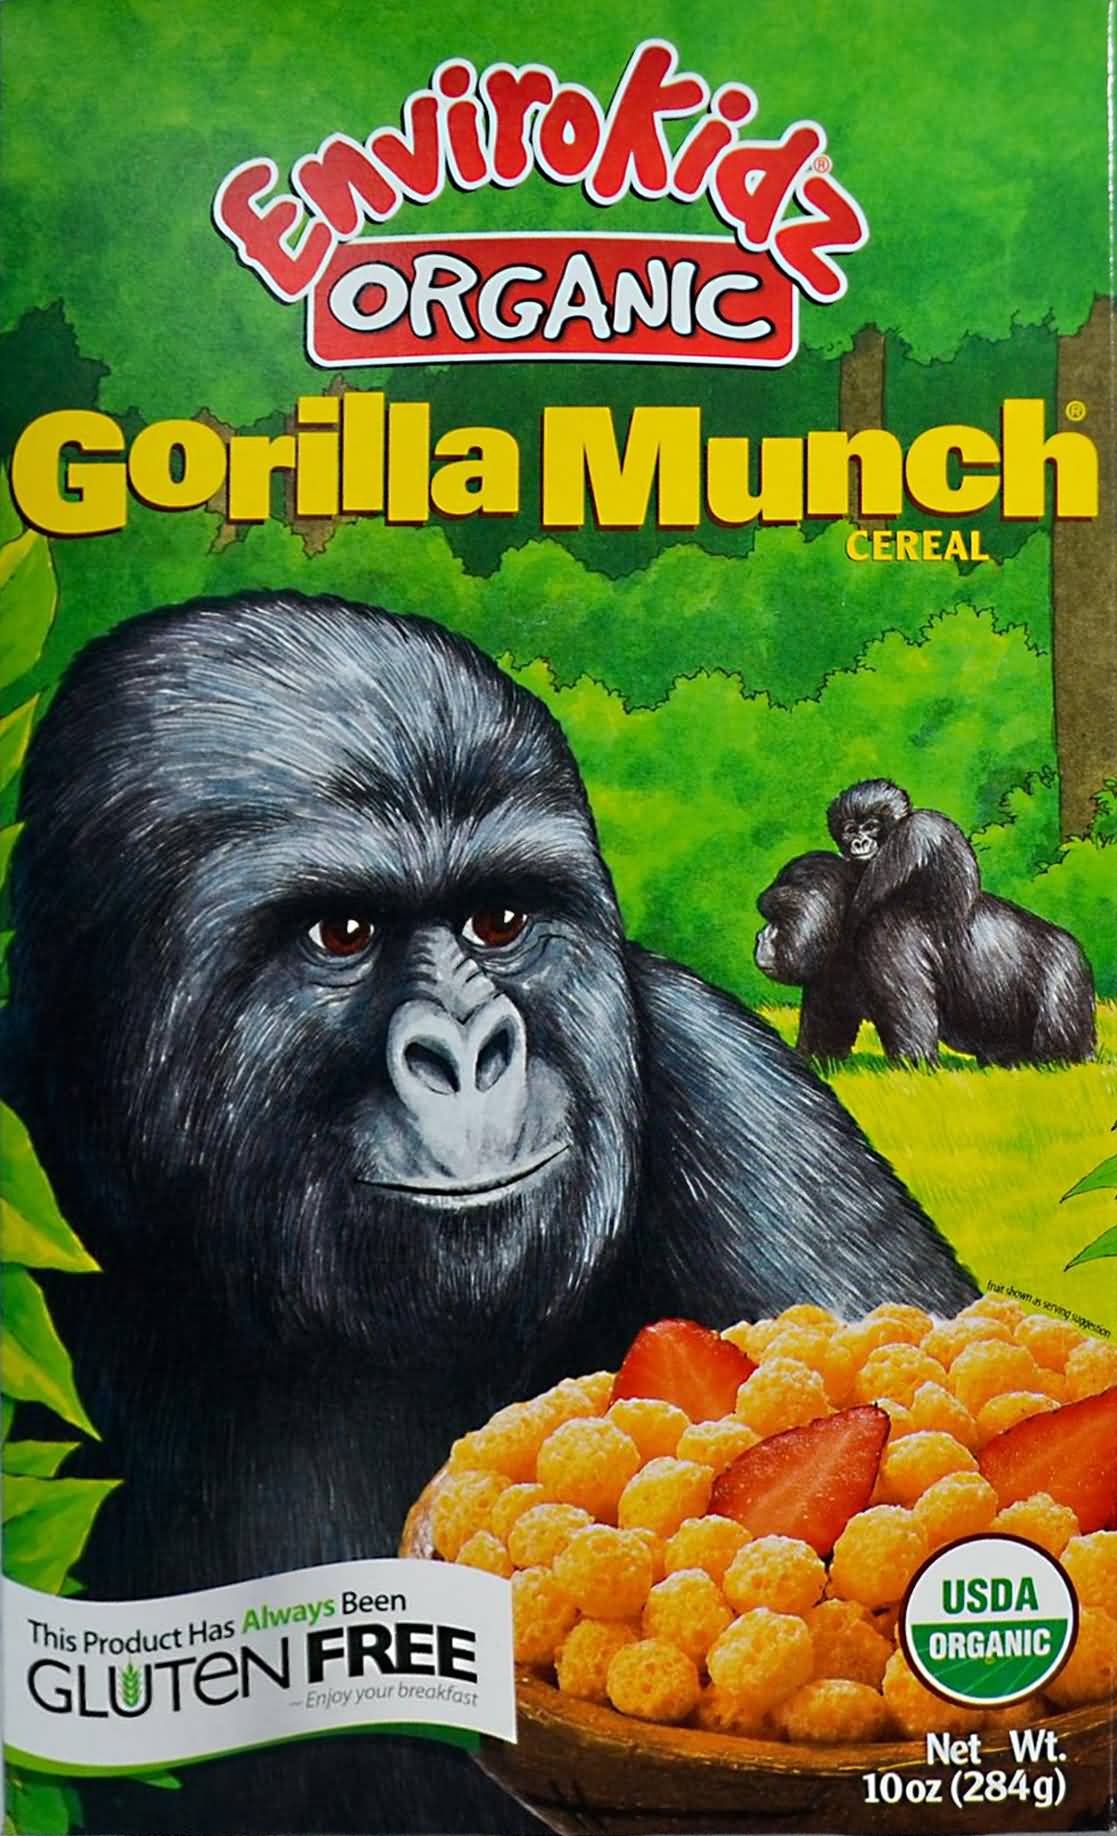 Gorilla Munch Meme Funny Image Photo Joke 07